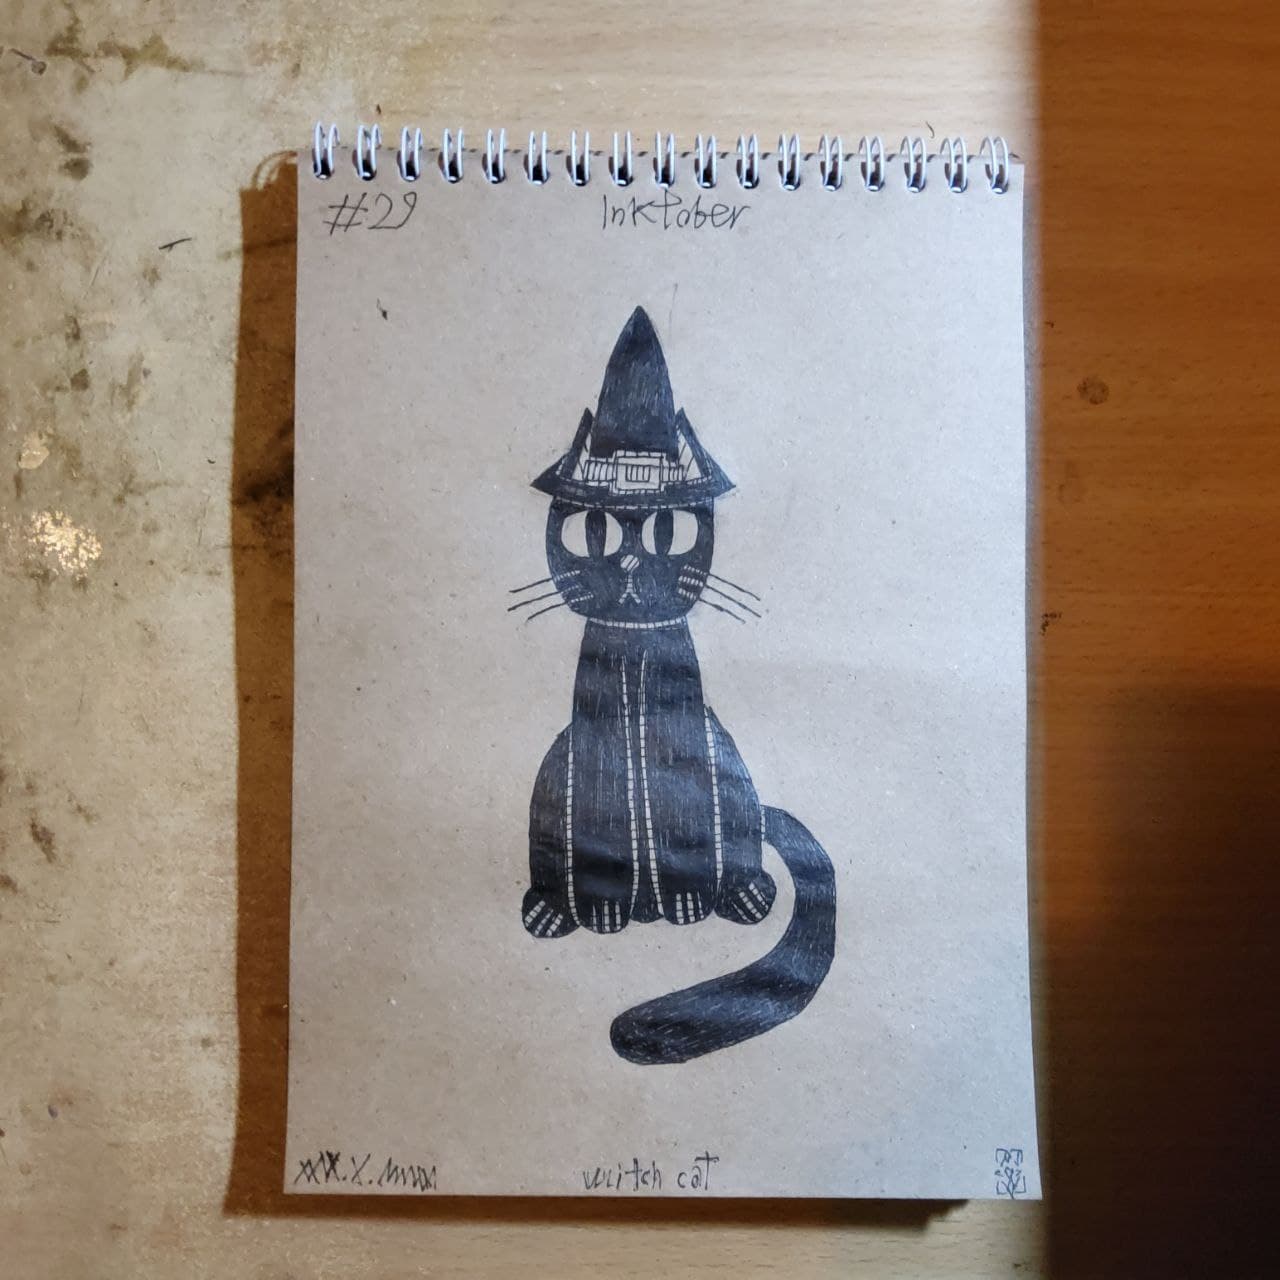 Noyo's Inktober 2021 day 29: Witch Cat